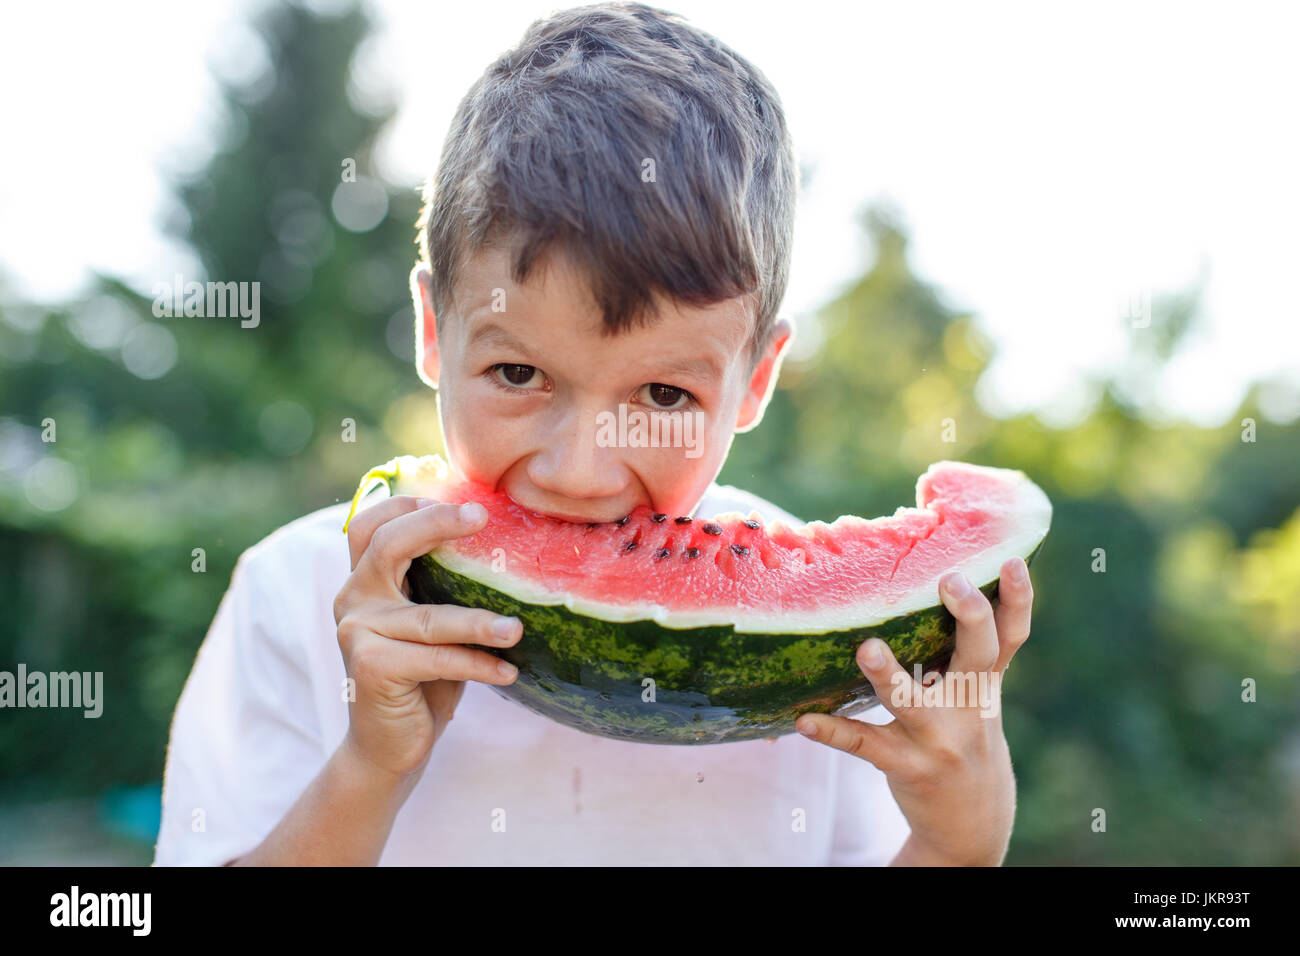 Little kid bite into watermelon outdoor Stock Photo